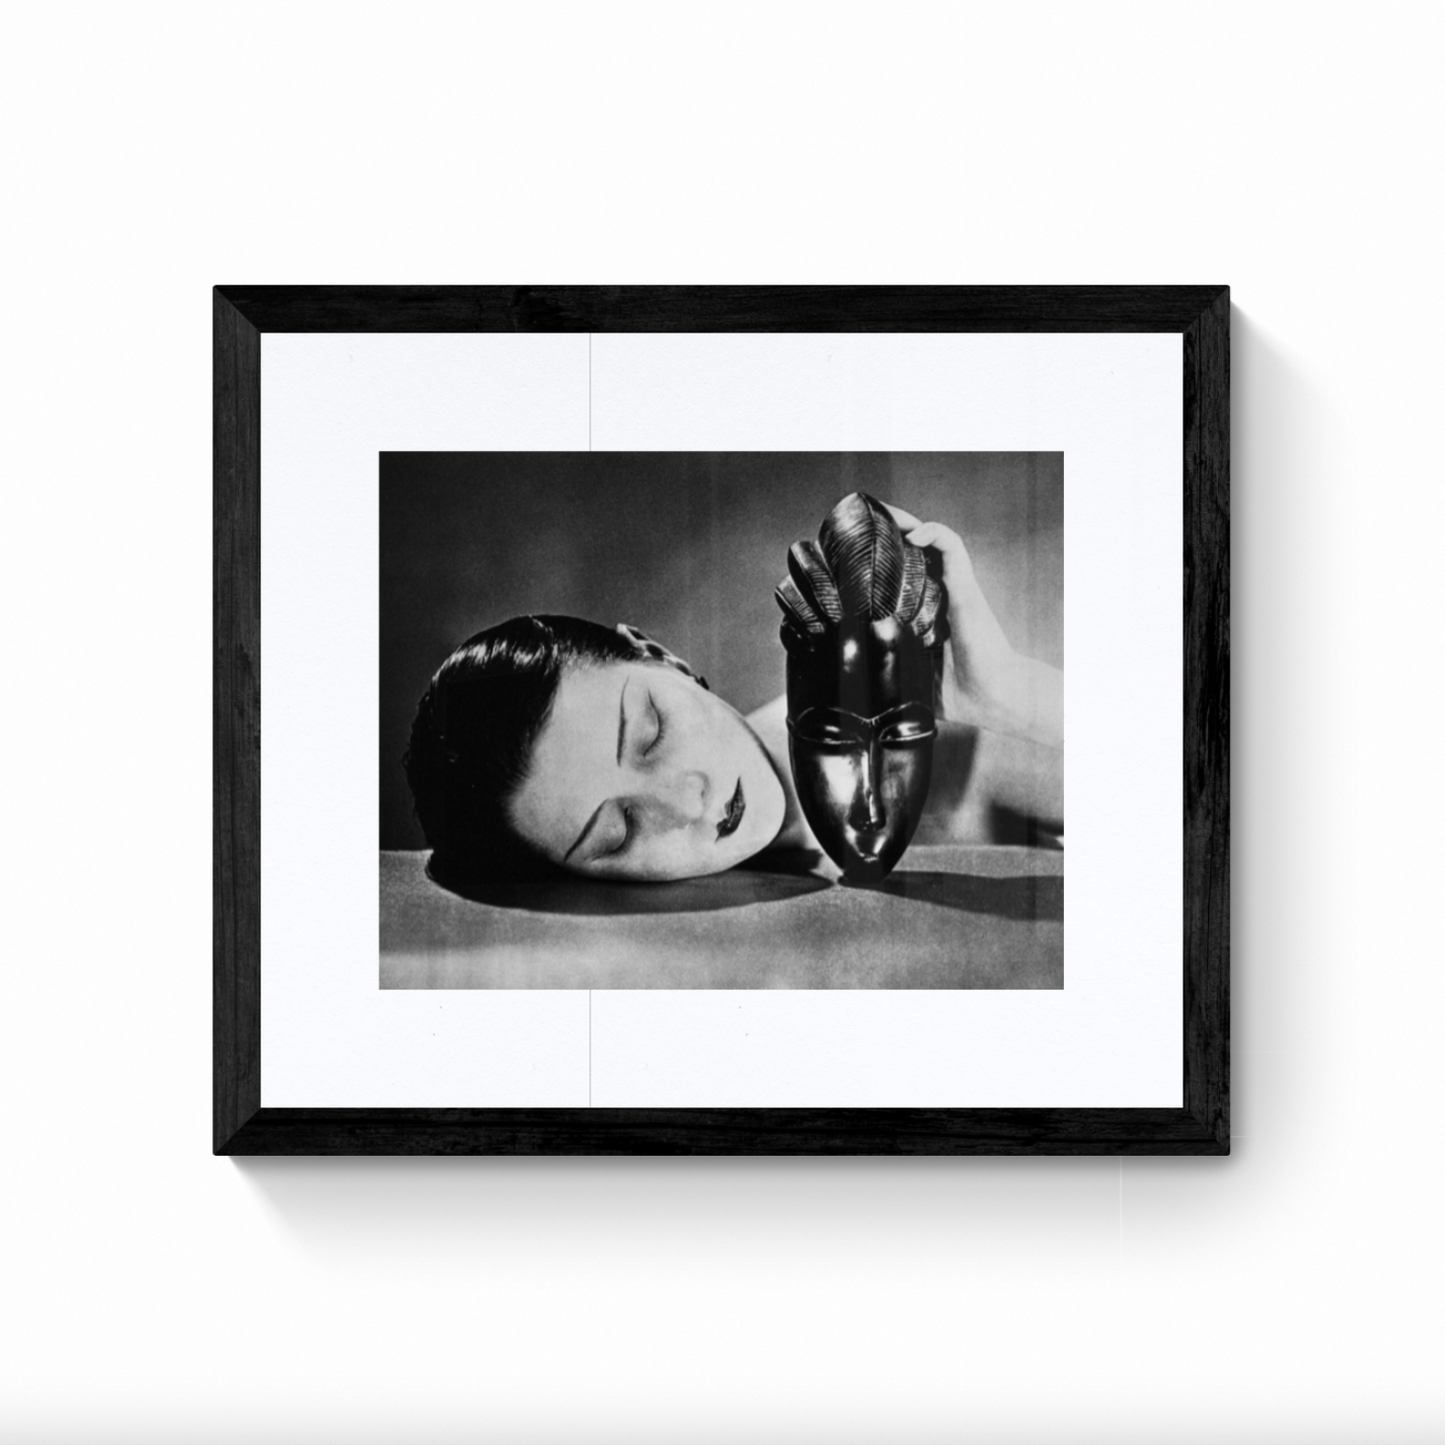 Ensemble de 3 tirages Man Ray, original photographs - Edition épuisée